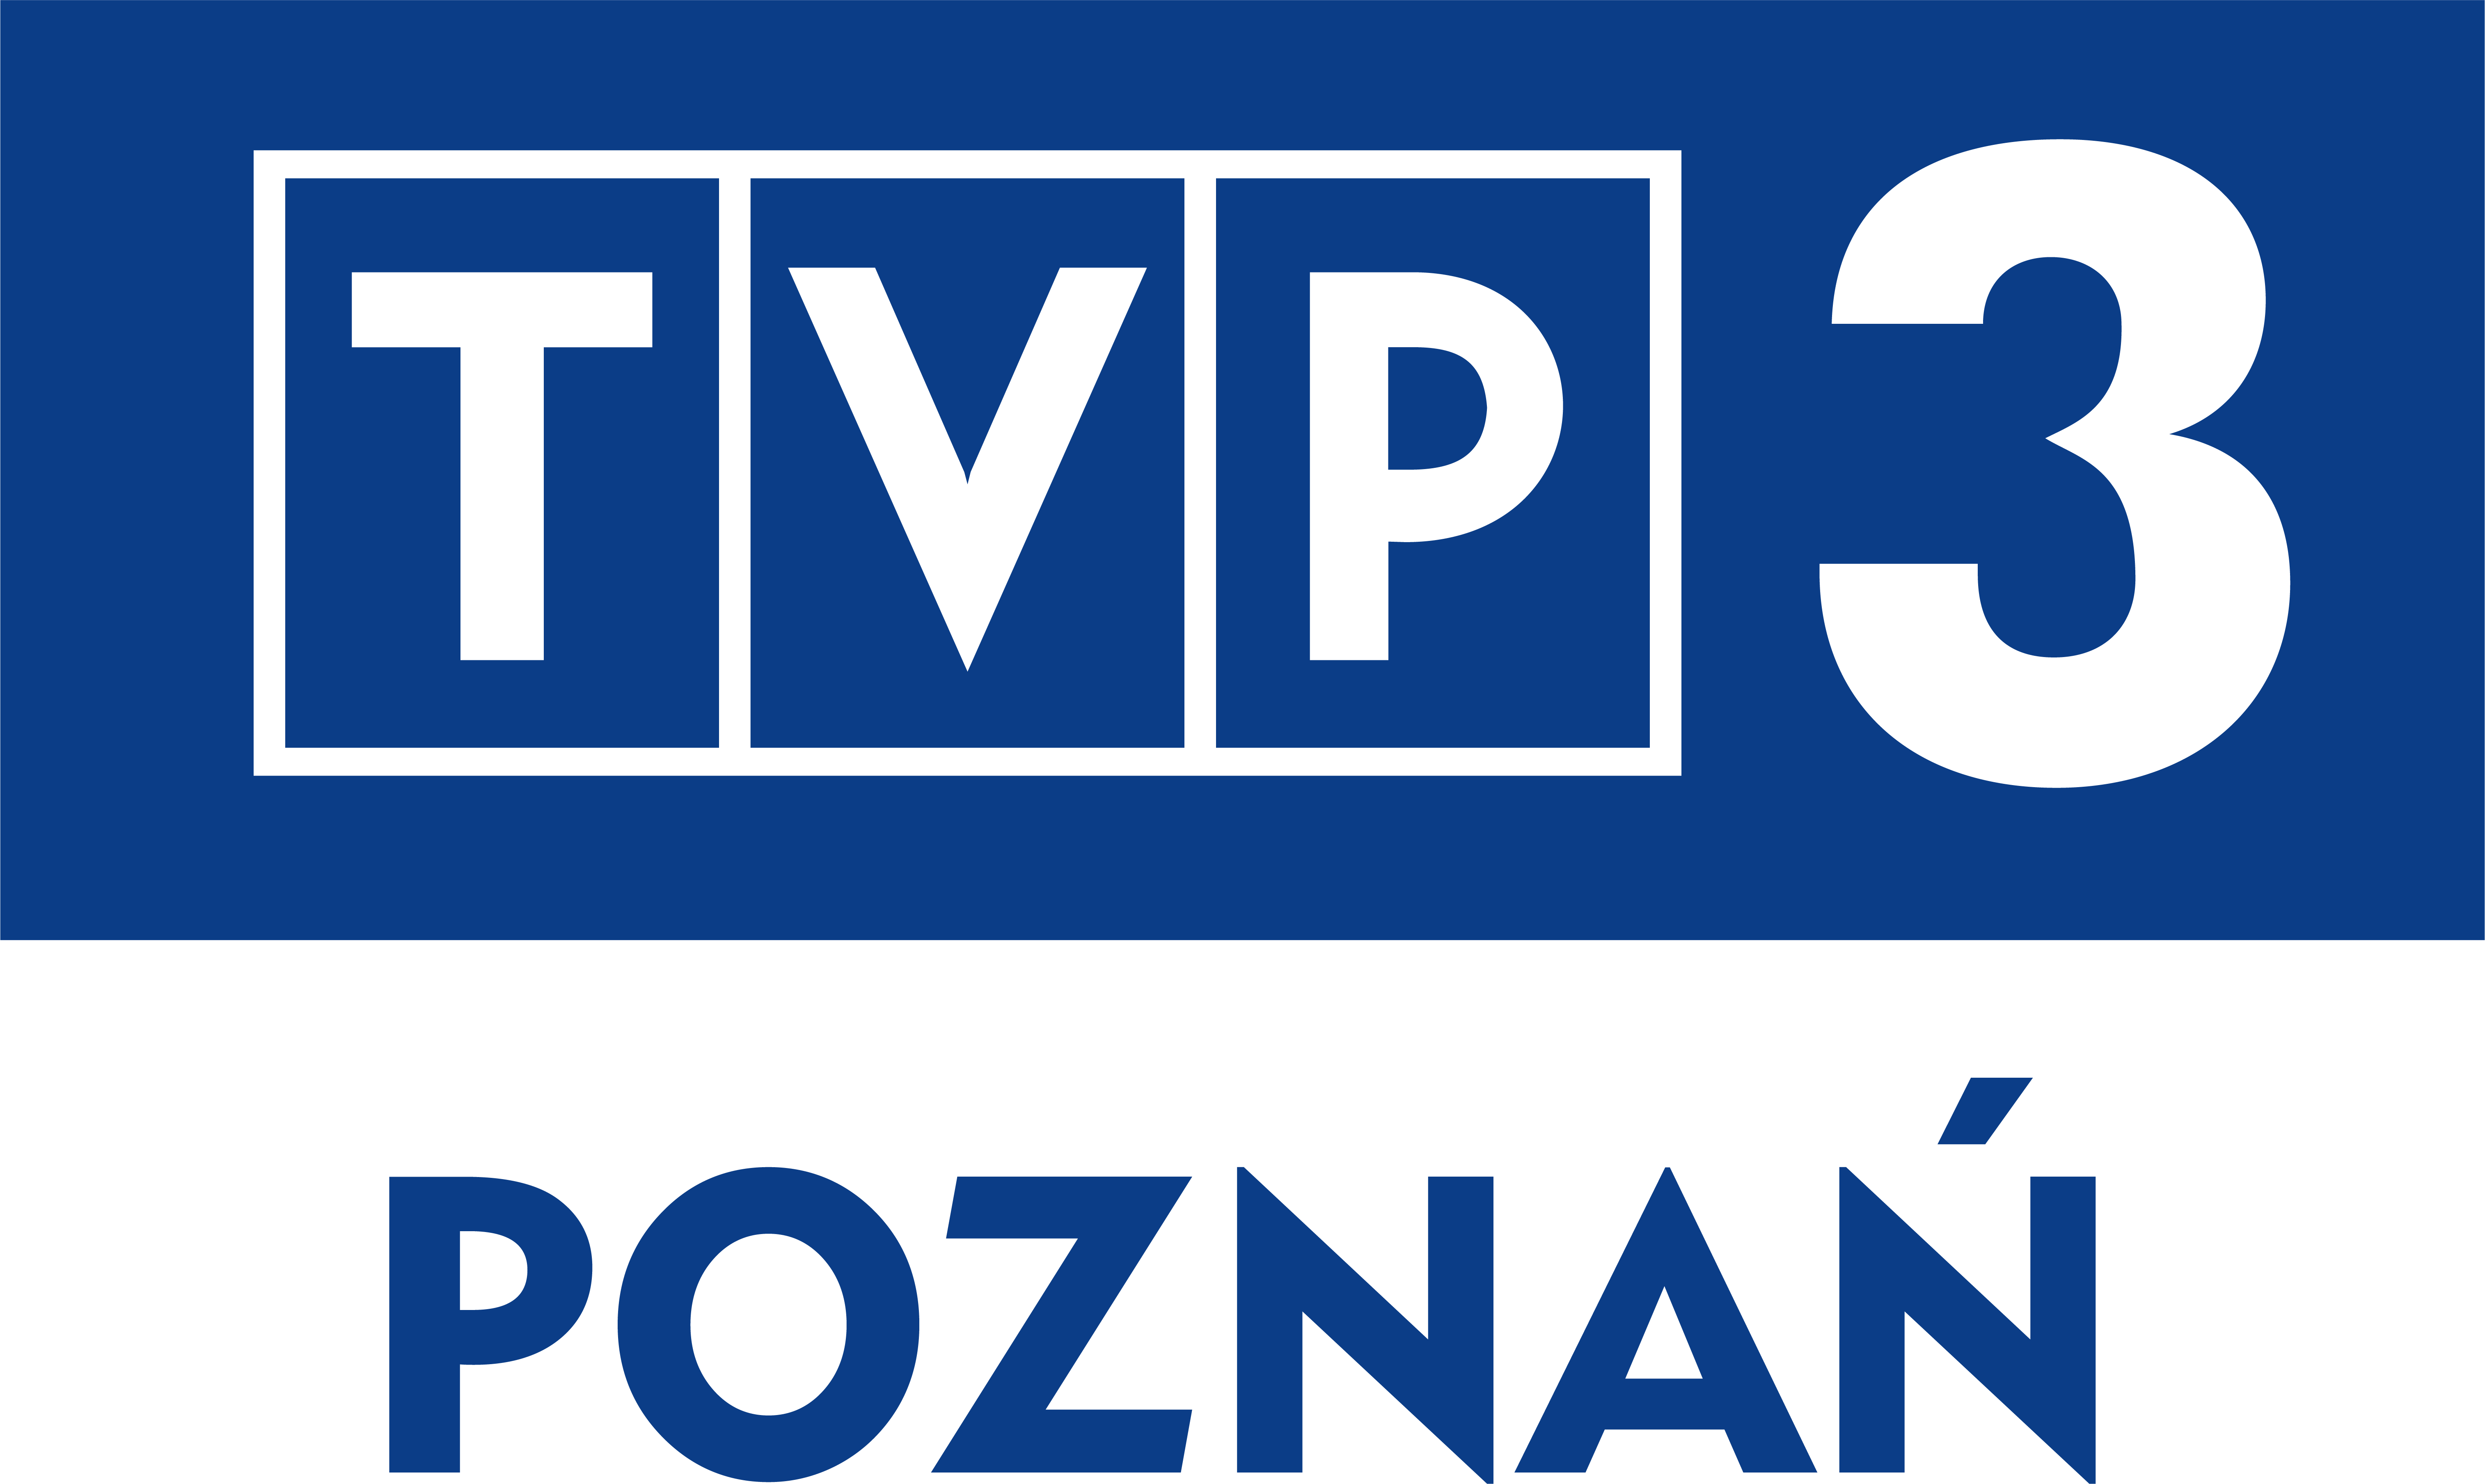 TVP3 Poznan podst kolor